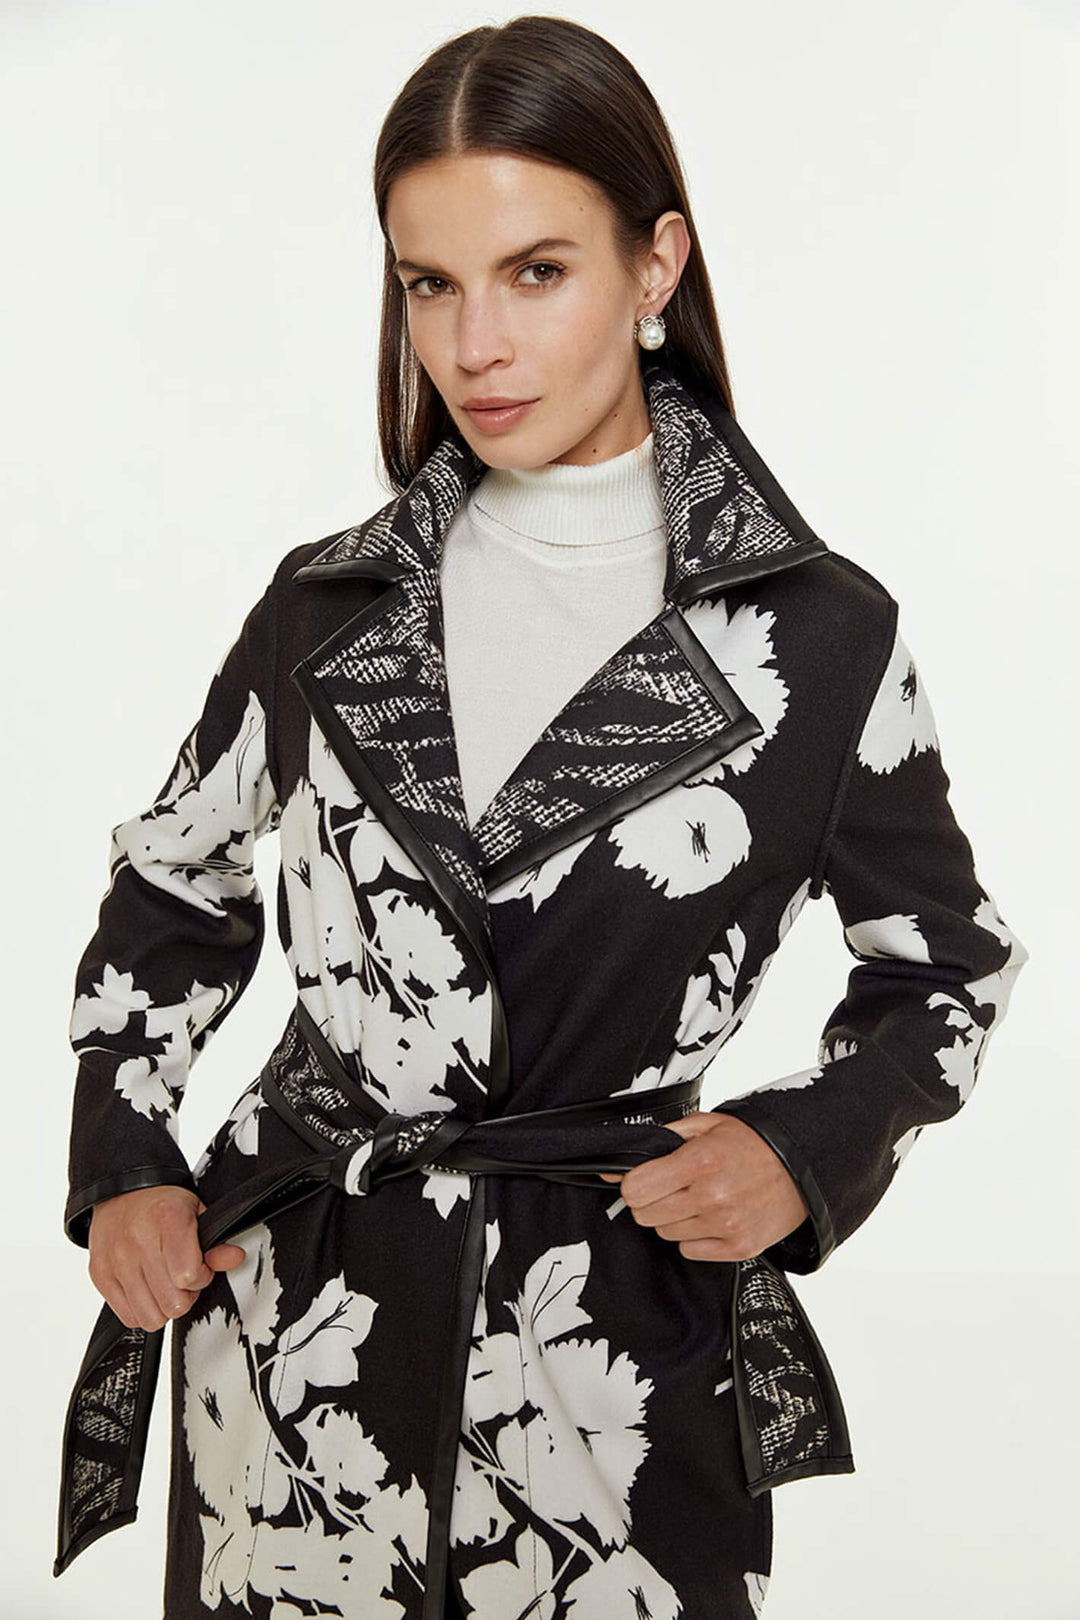 Access Fashion 9026-1089 Black & White Reversible Tie Coat - Experience Boutique